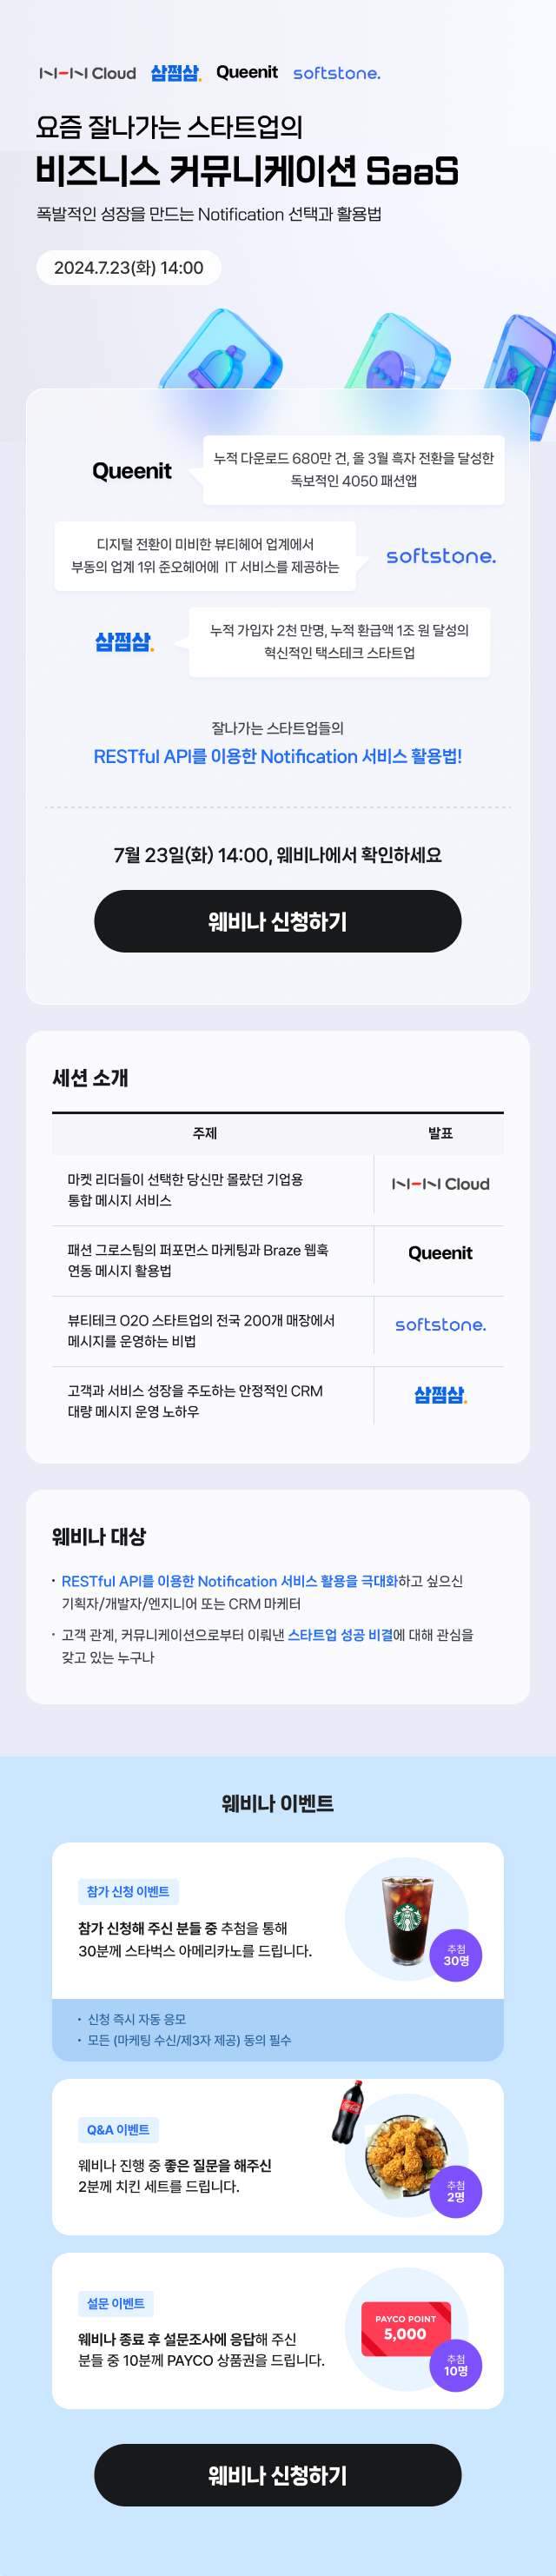 Notification webinar_eDM_시안2_1.png